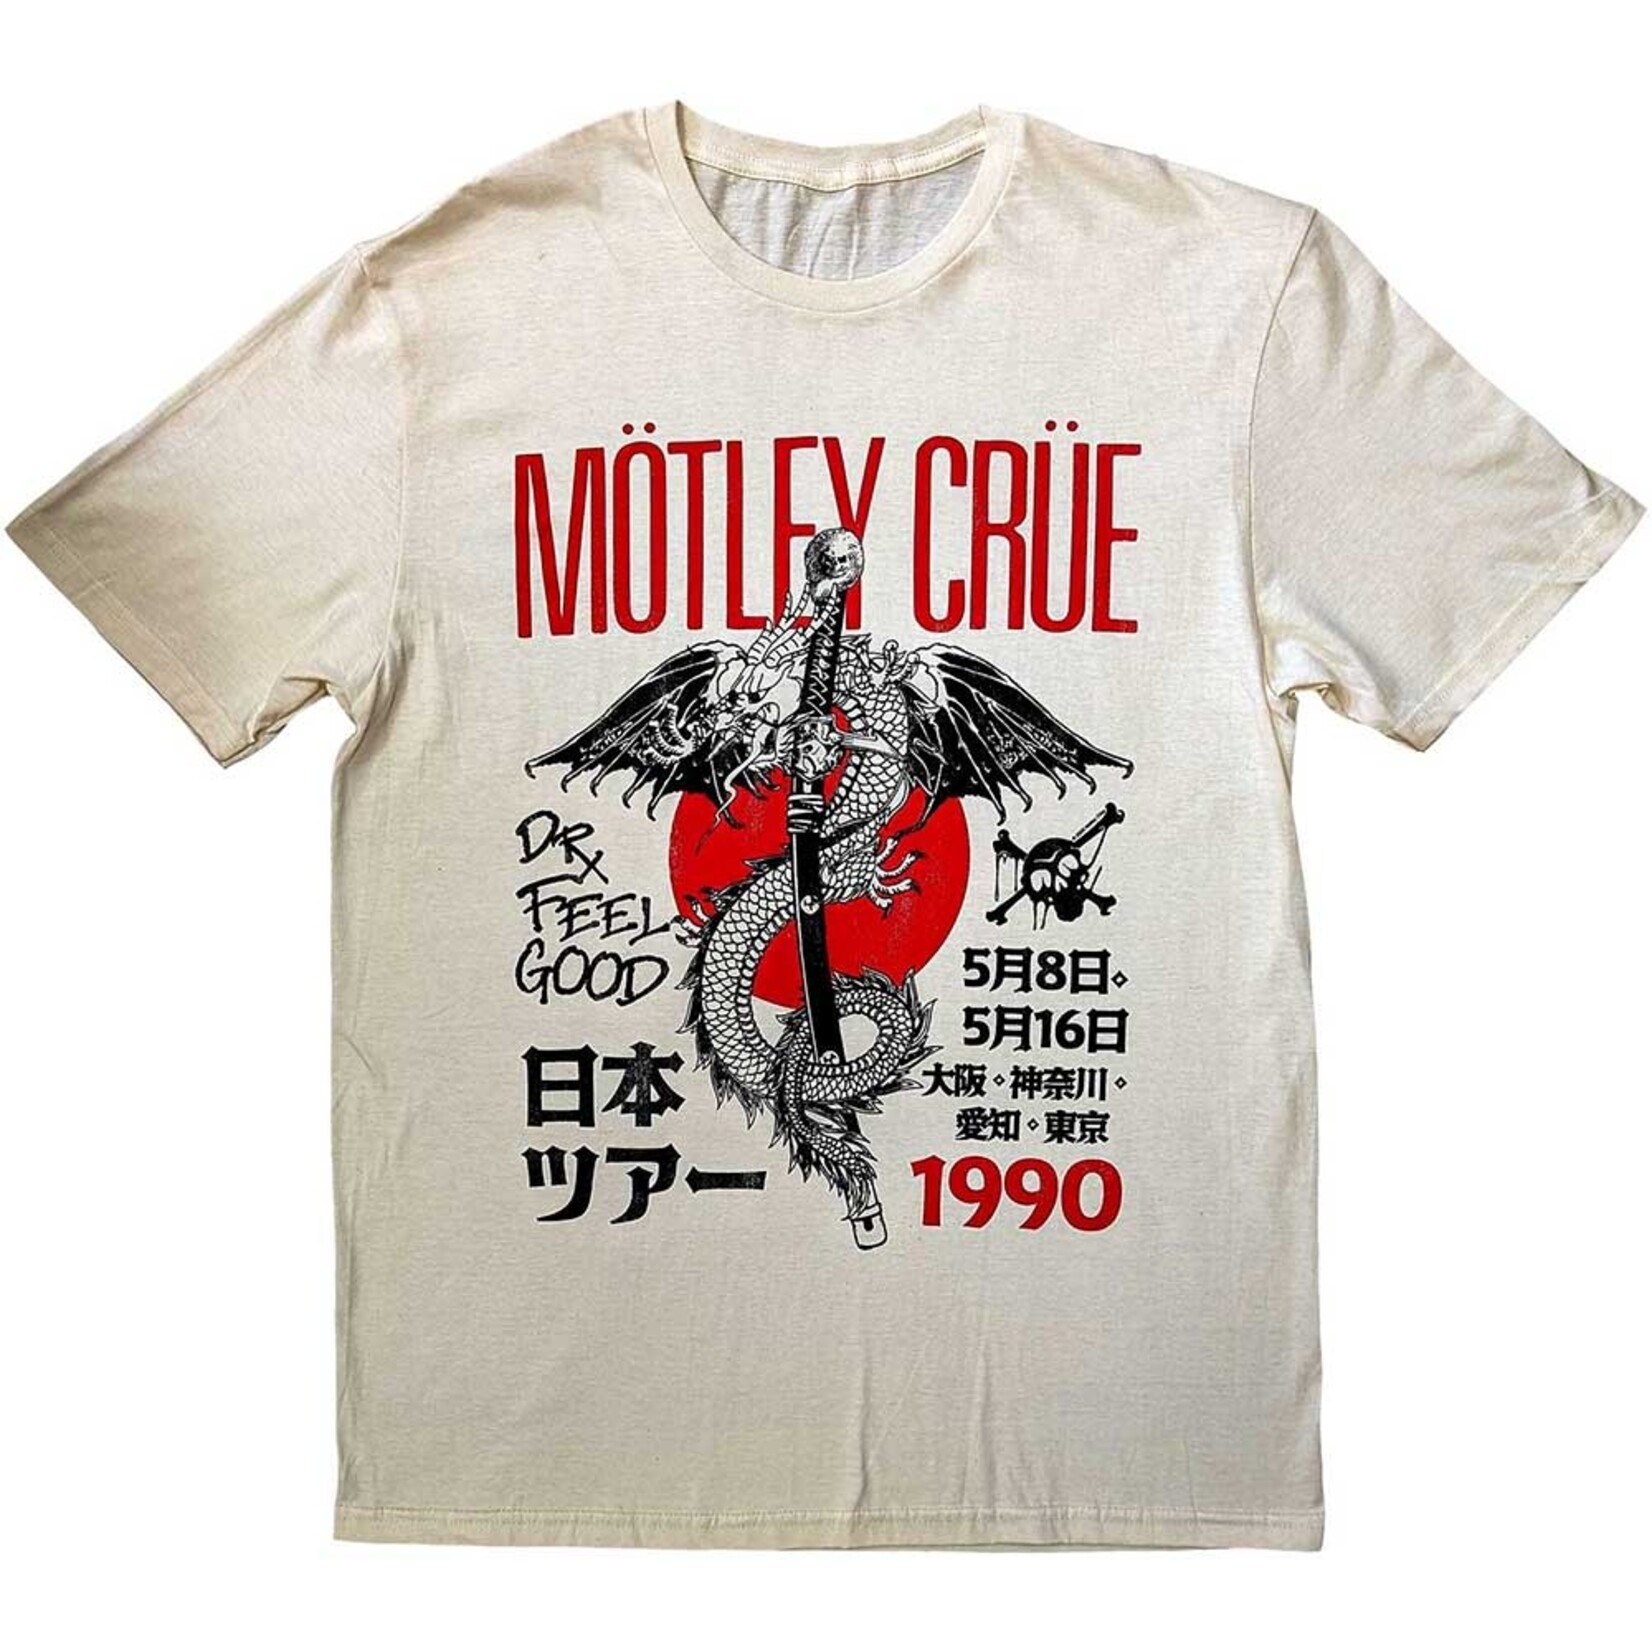 Motley Crue - Dr. Feelgood Japanese Tour 1990